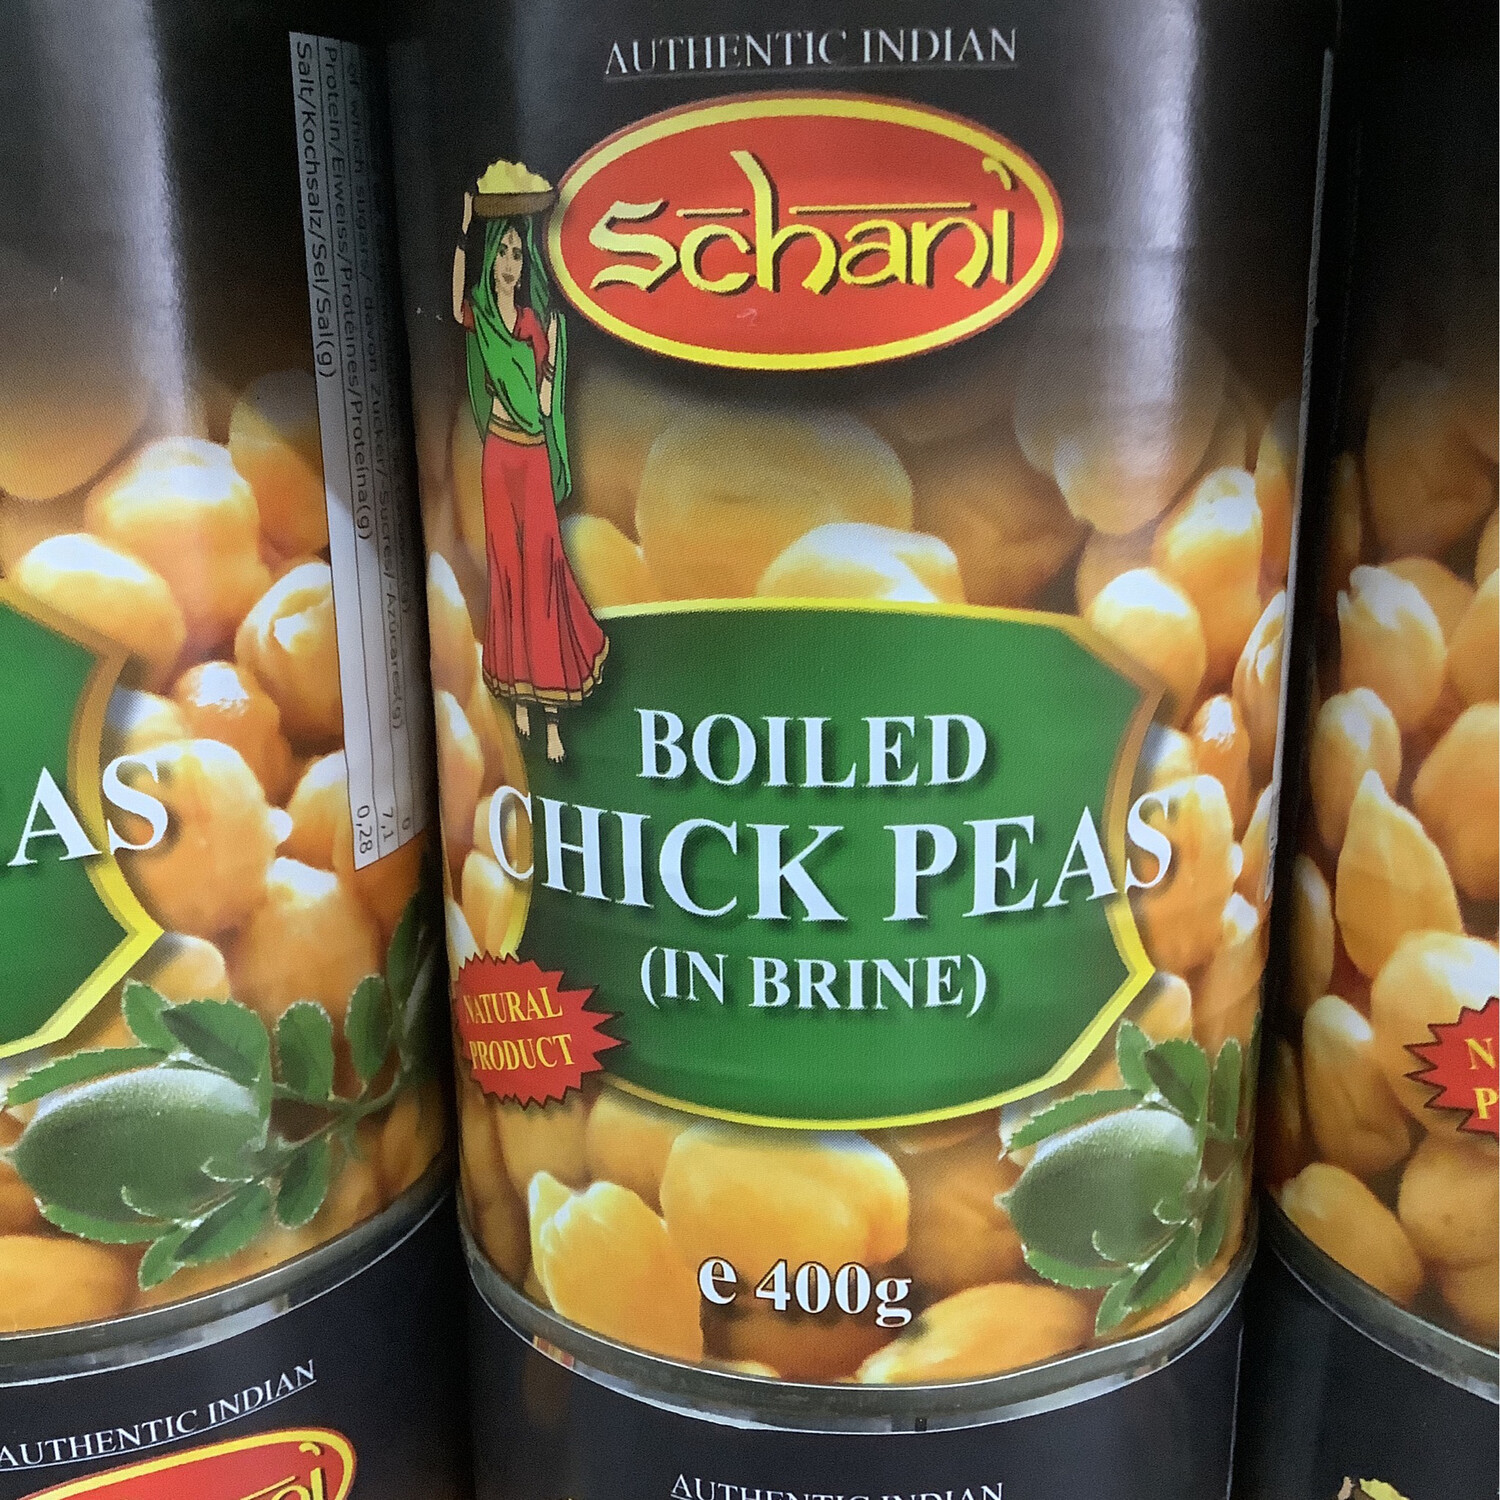 Schani Boiled Chick Peas 400g